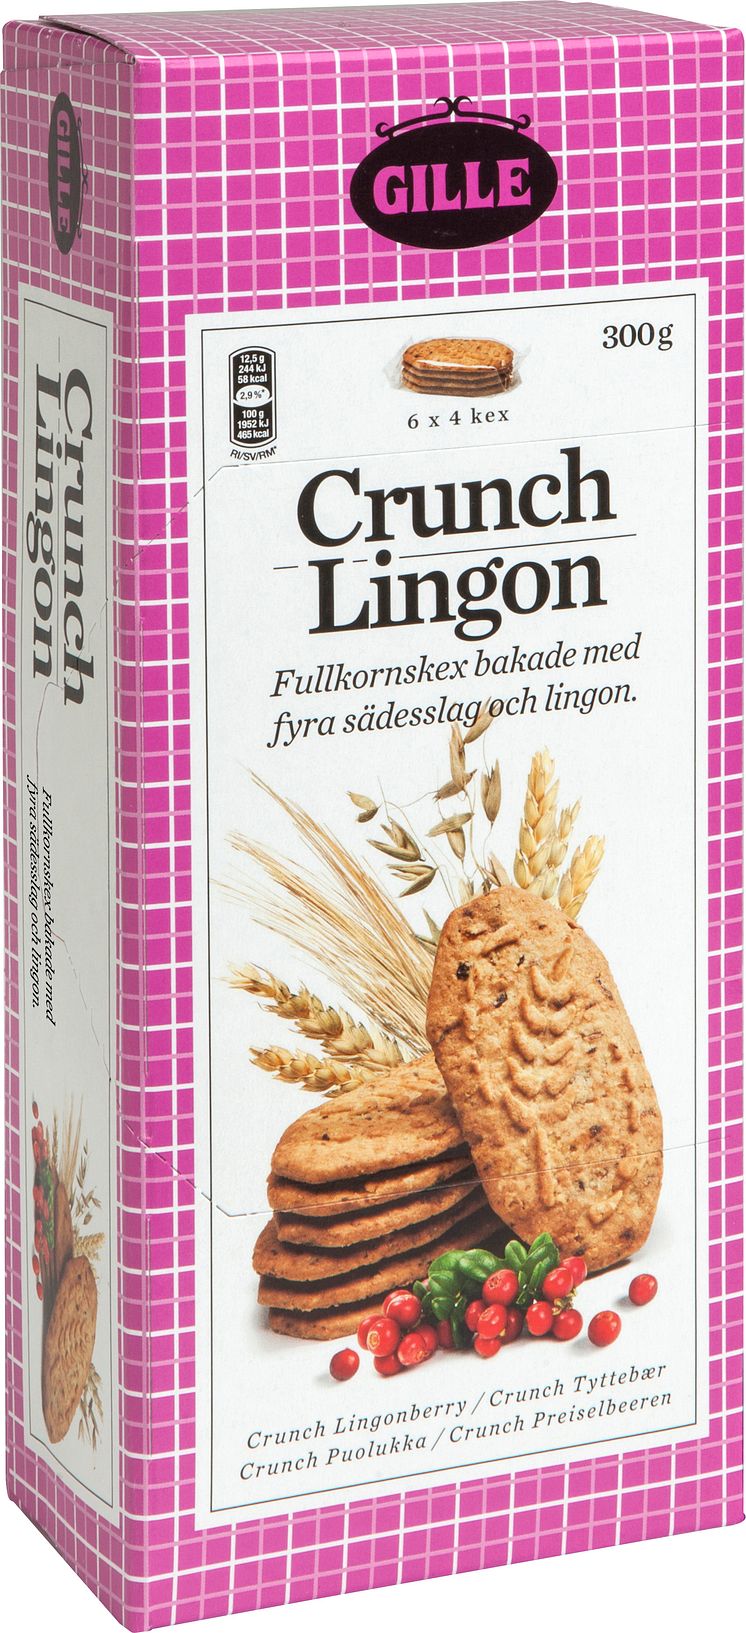 Gille Crunch Lingon - mellanmålskex